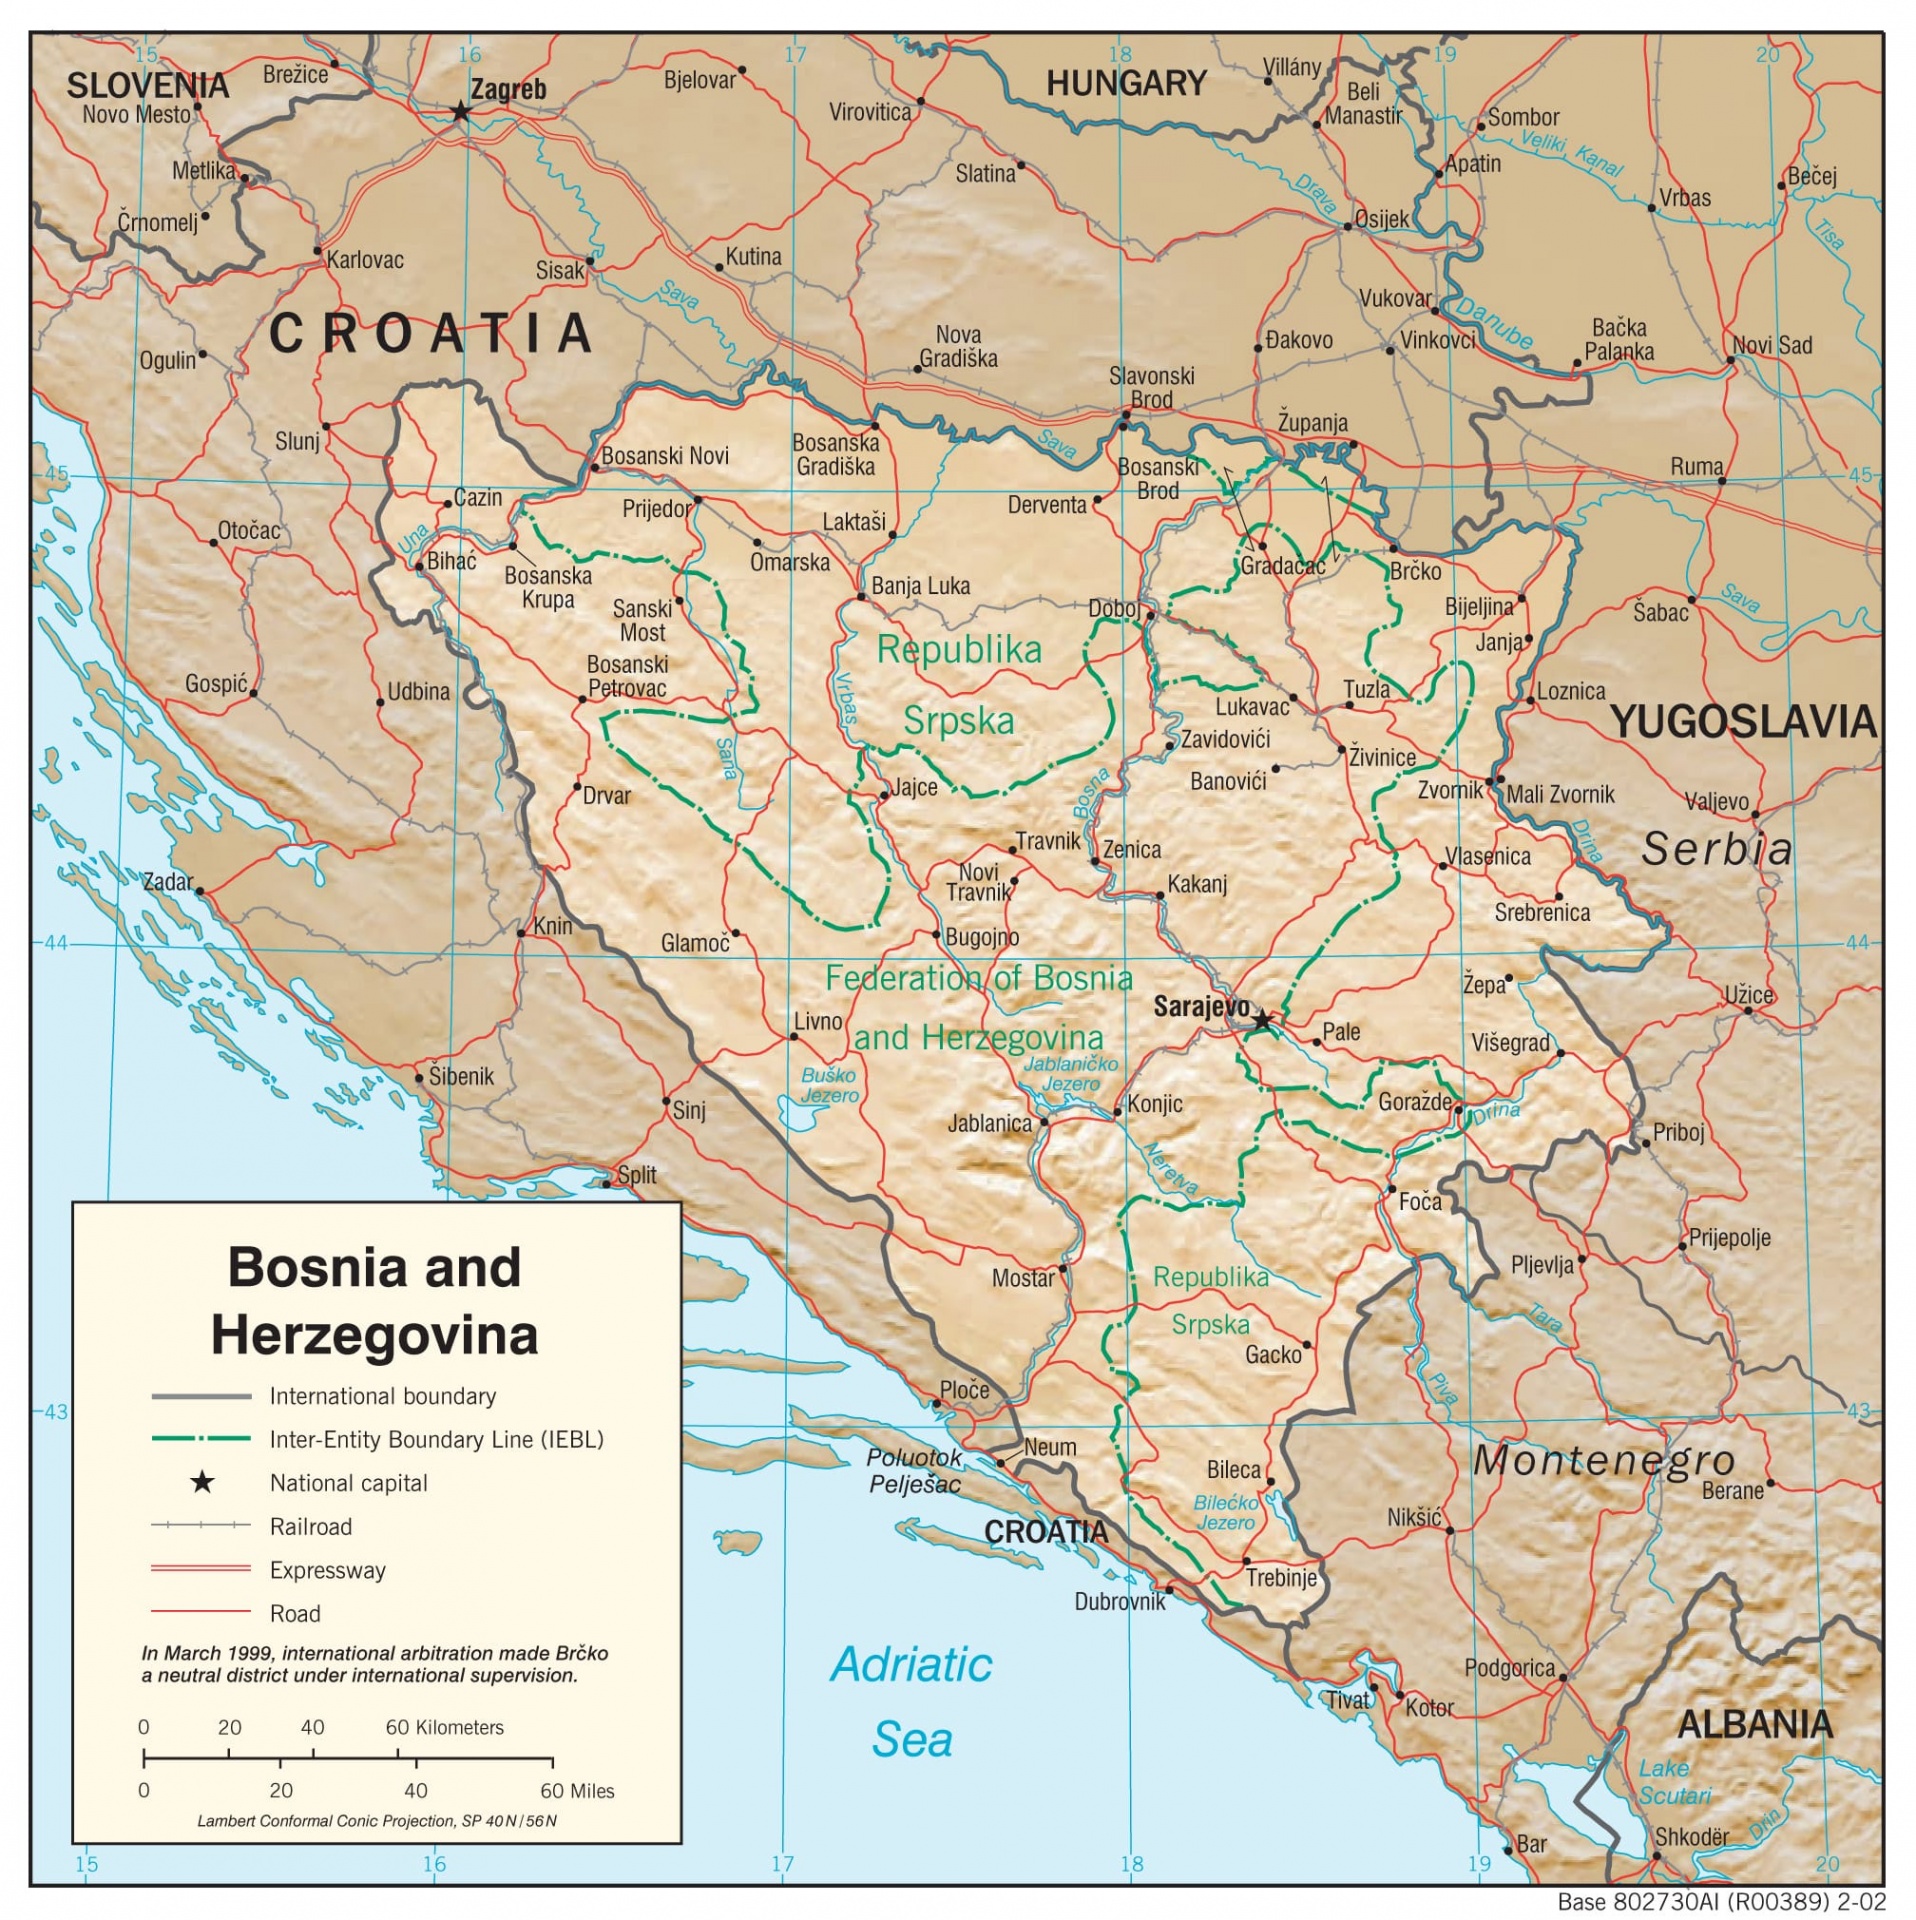 Bosnia and Herzegovina Physiography Map